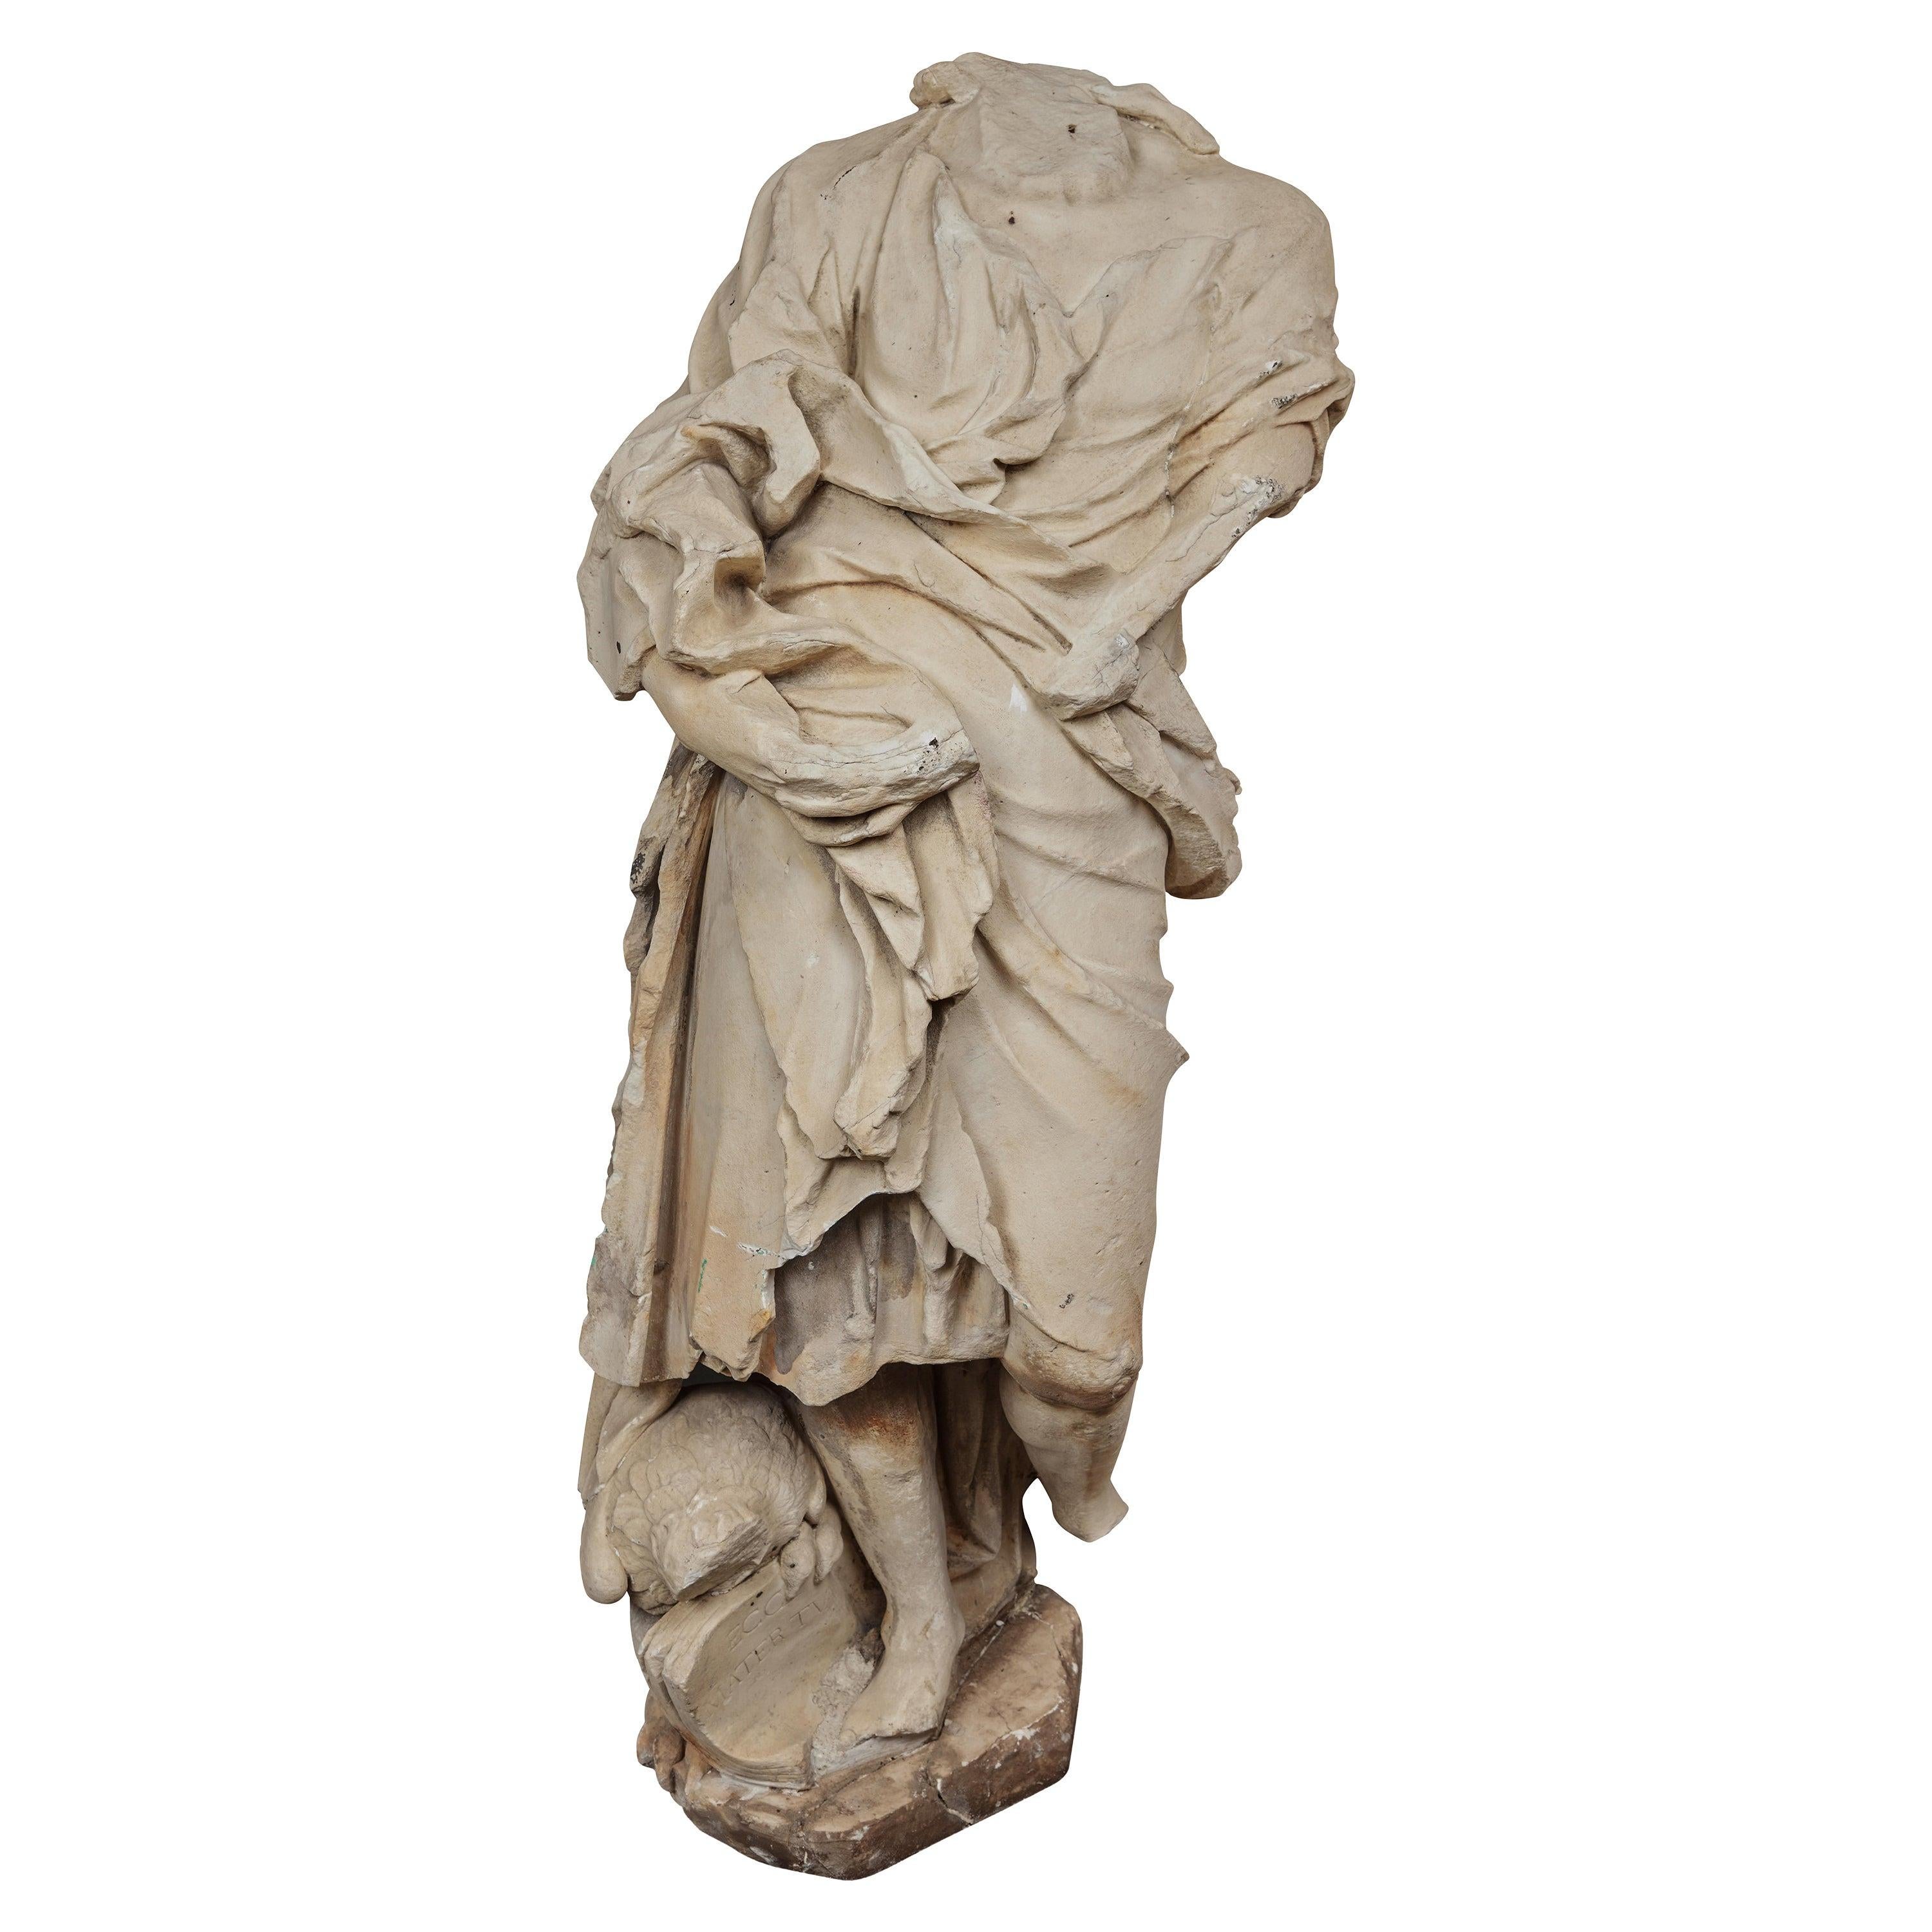 Fragment de figure en marbre de la Renaissance